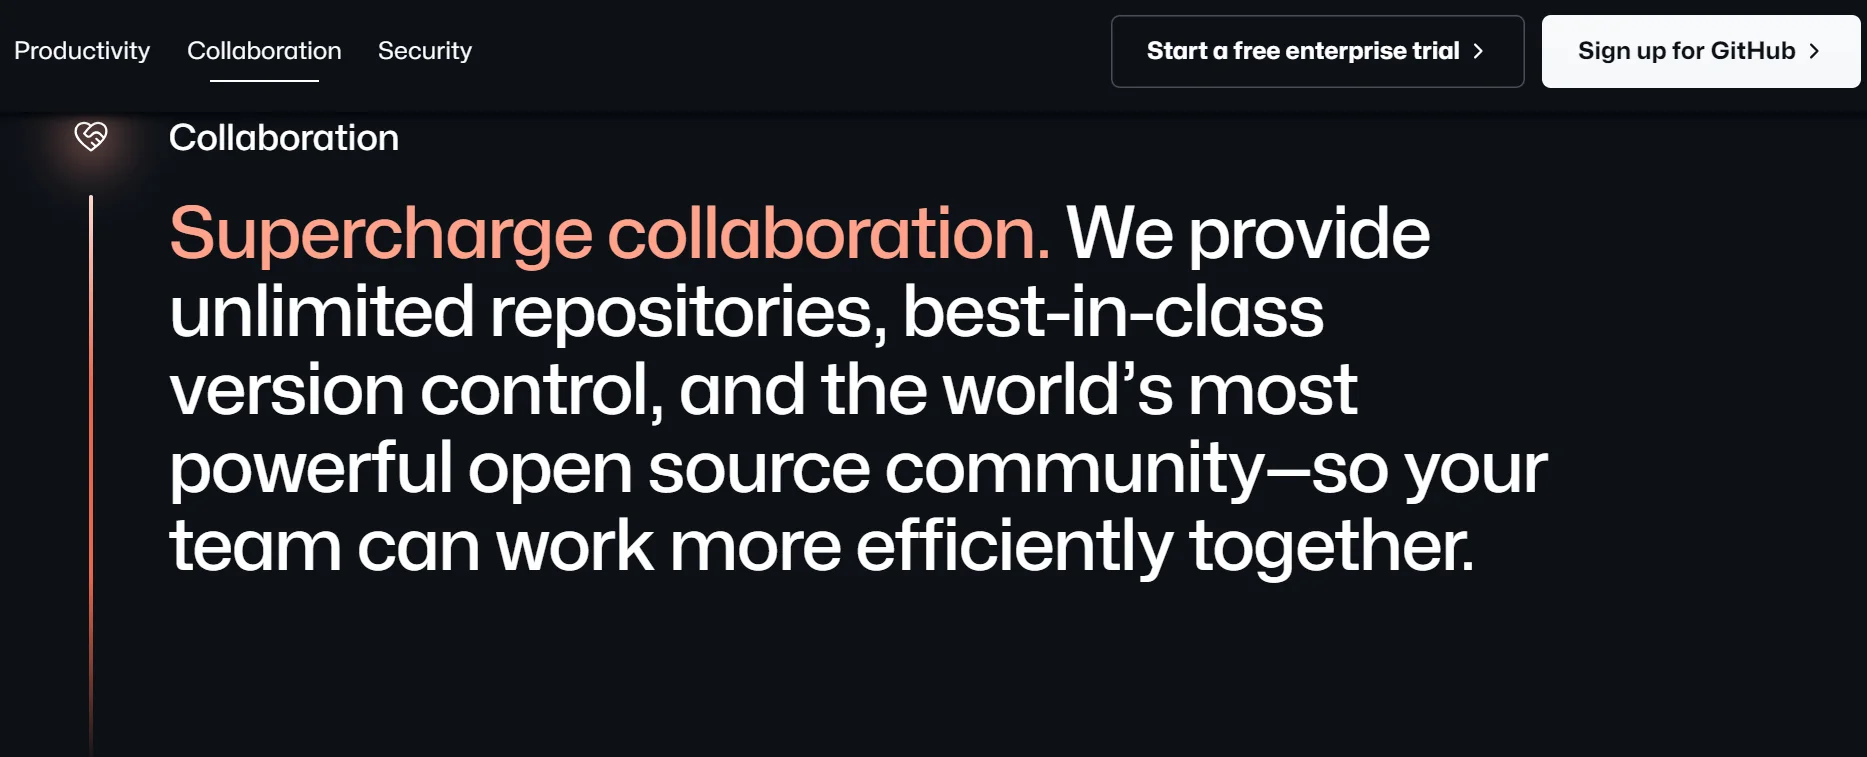 A screenshot of the GitHub home page